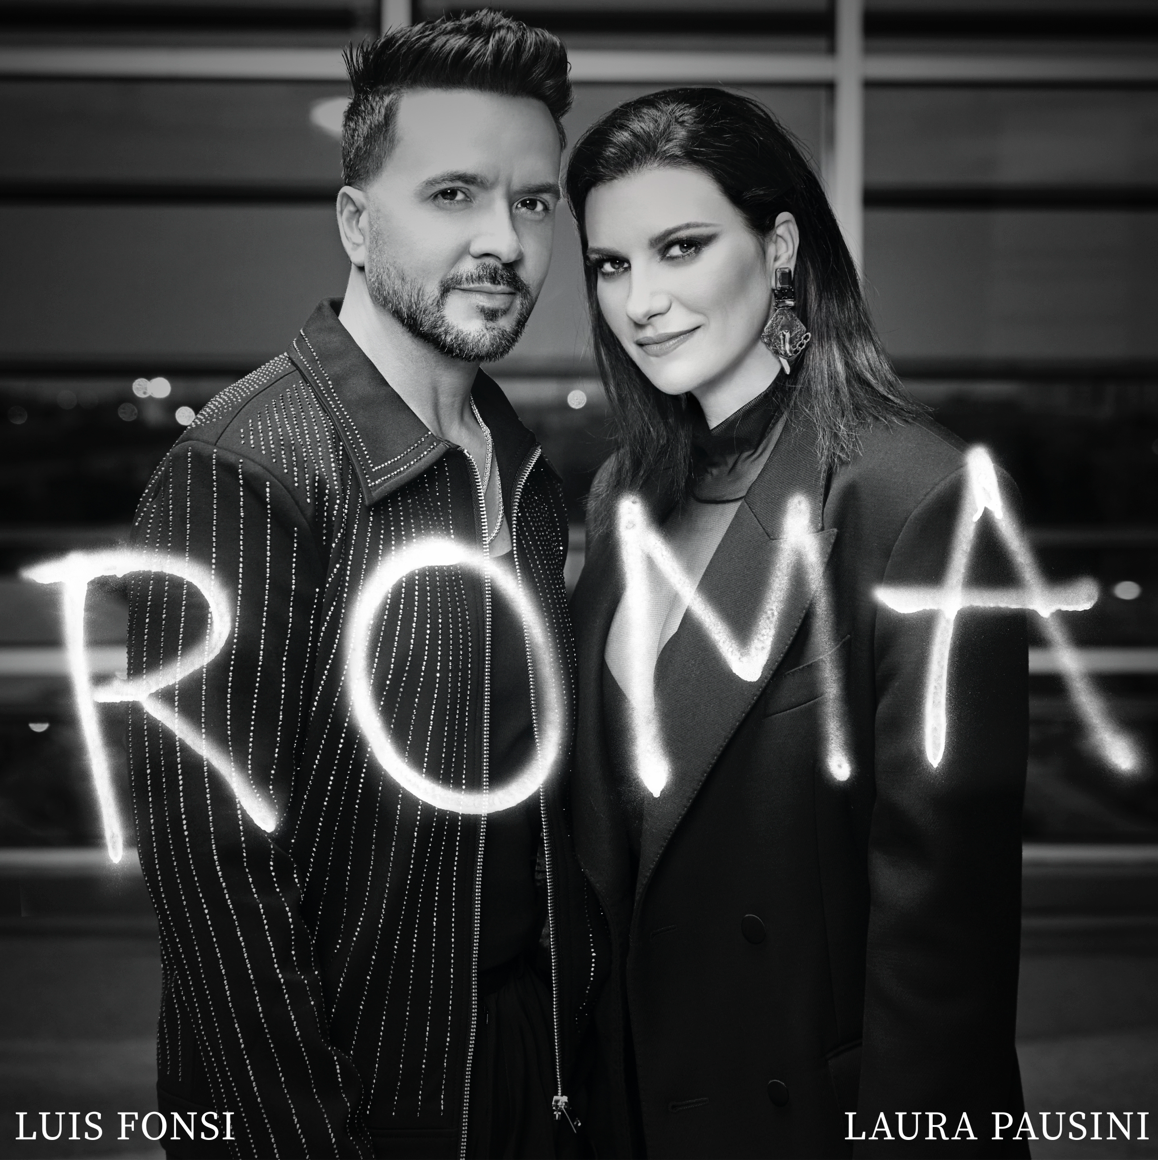 LUIS FONSI y LAURA PAUSINI lanza nuevo tema “Roma”